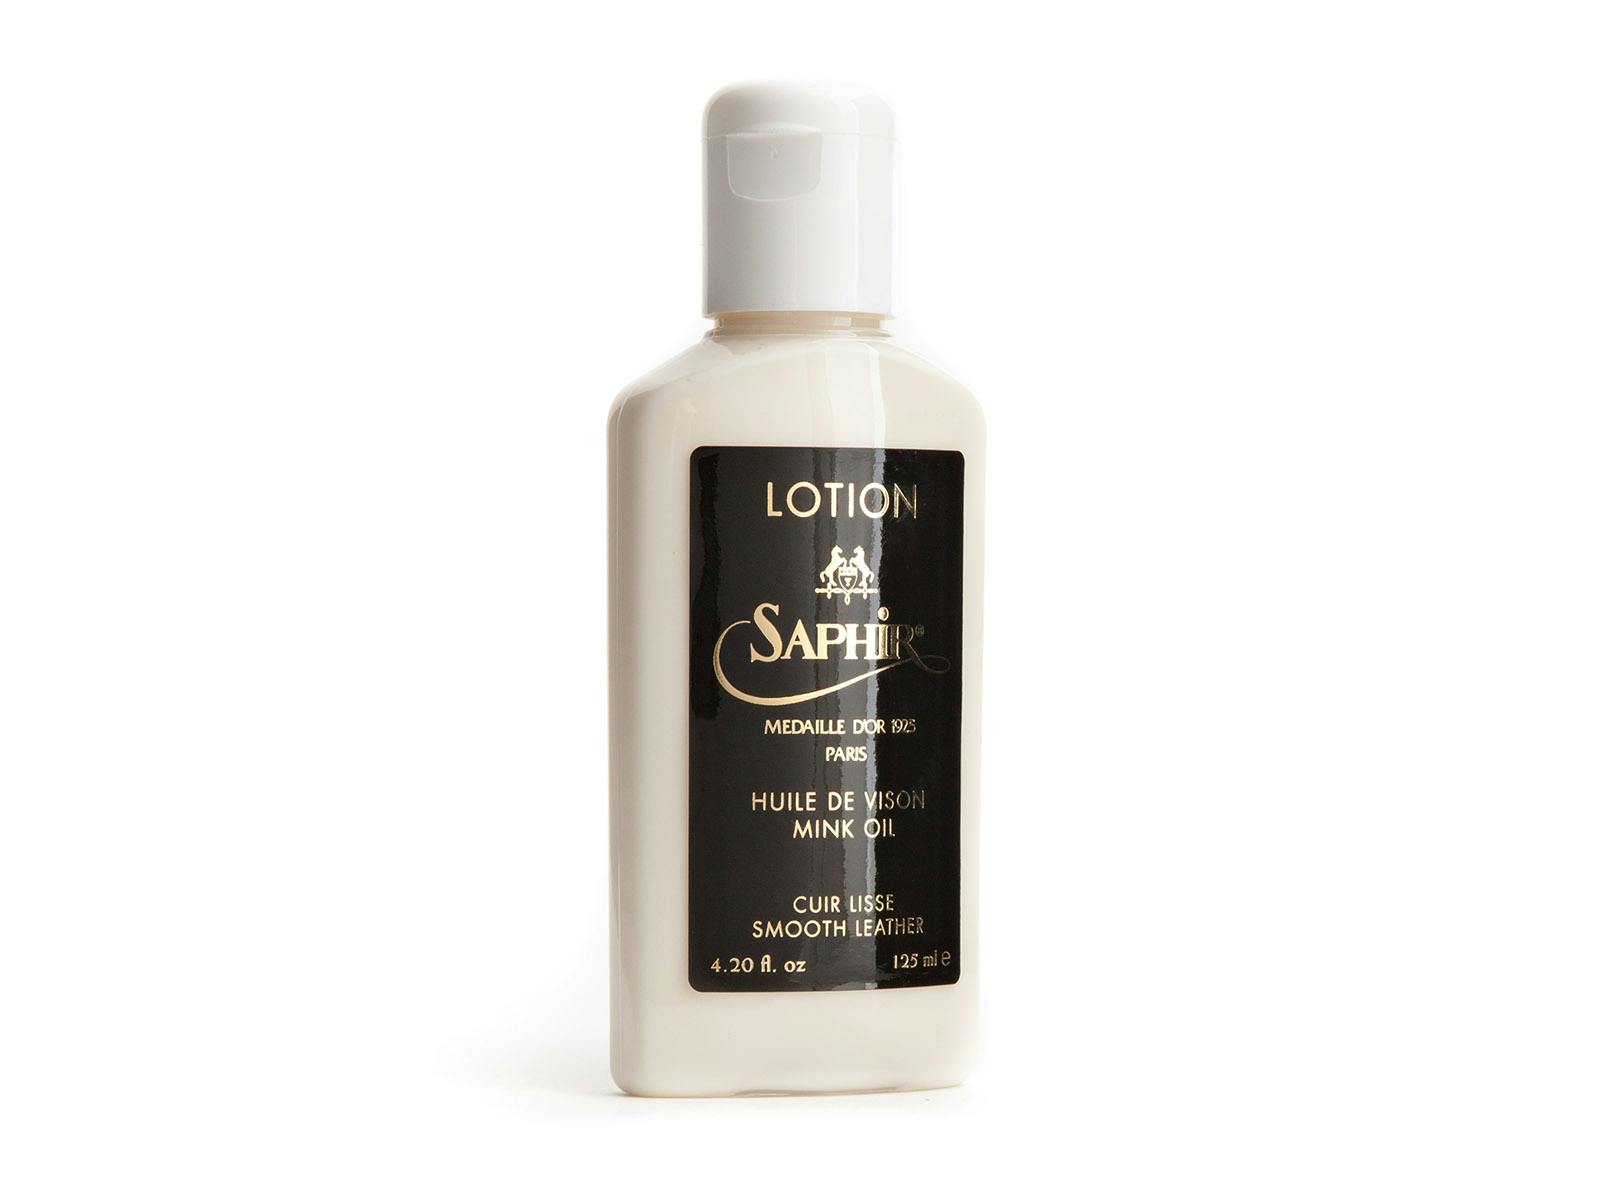 Saphir Lotion